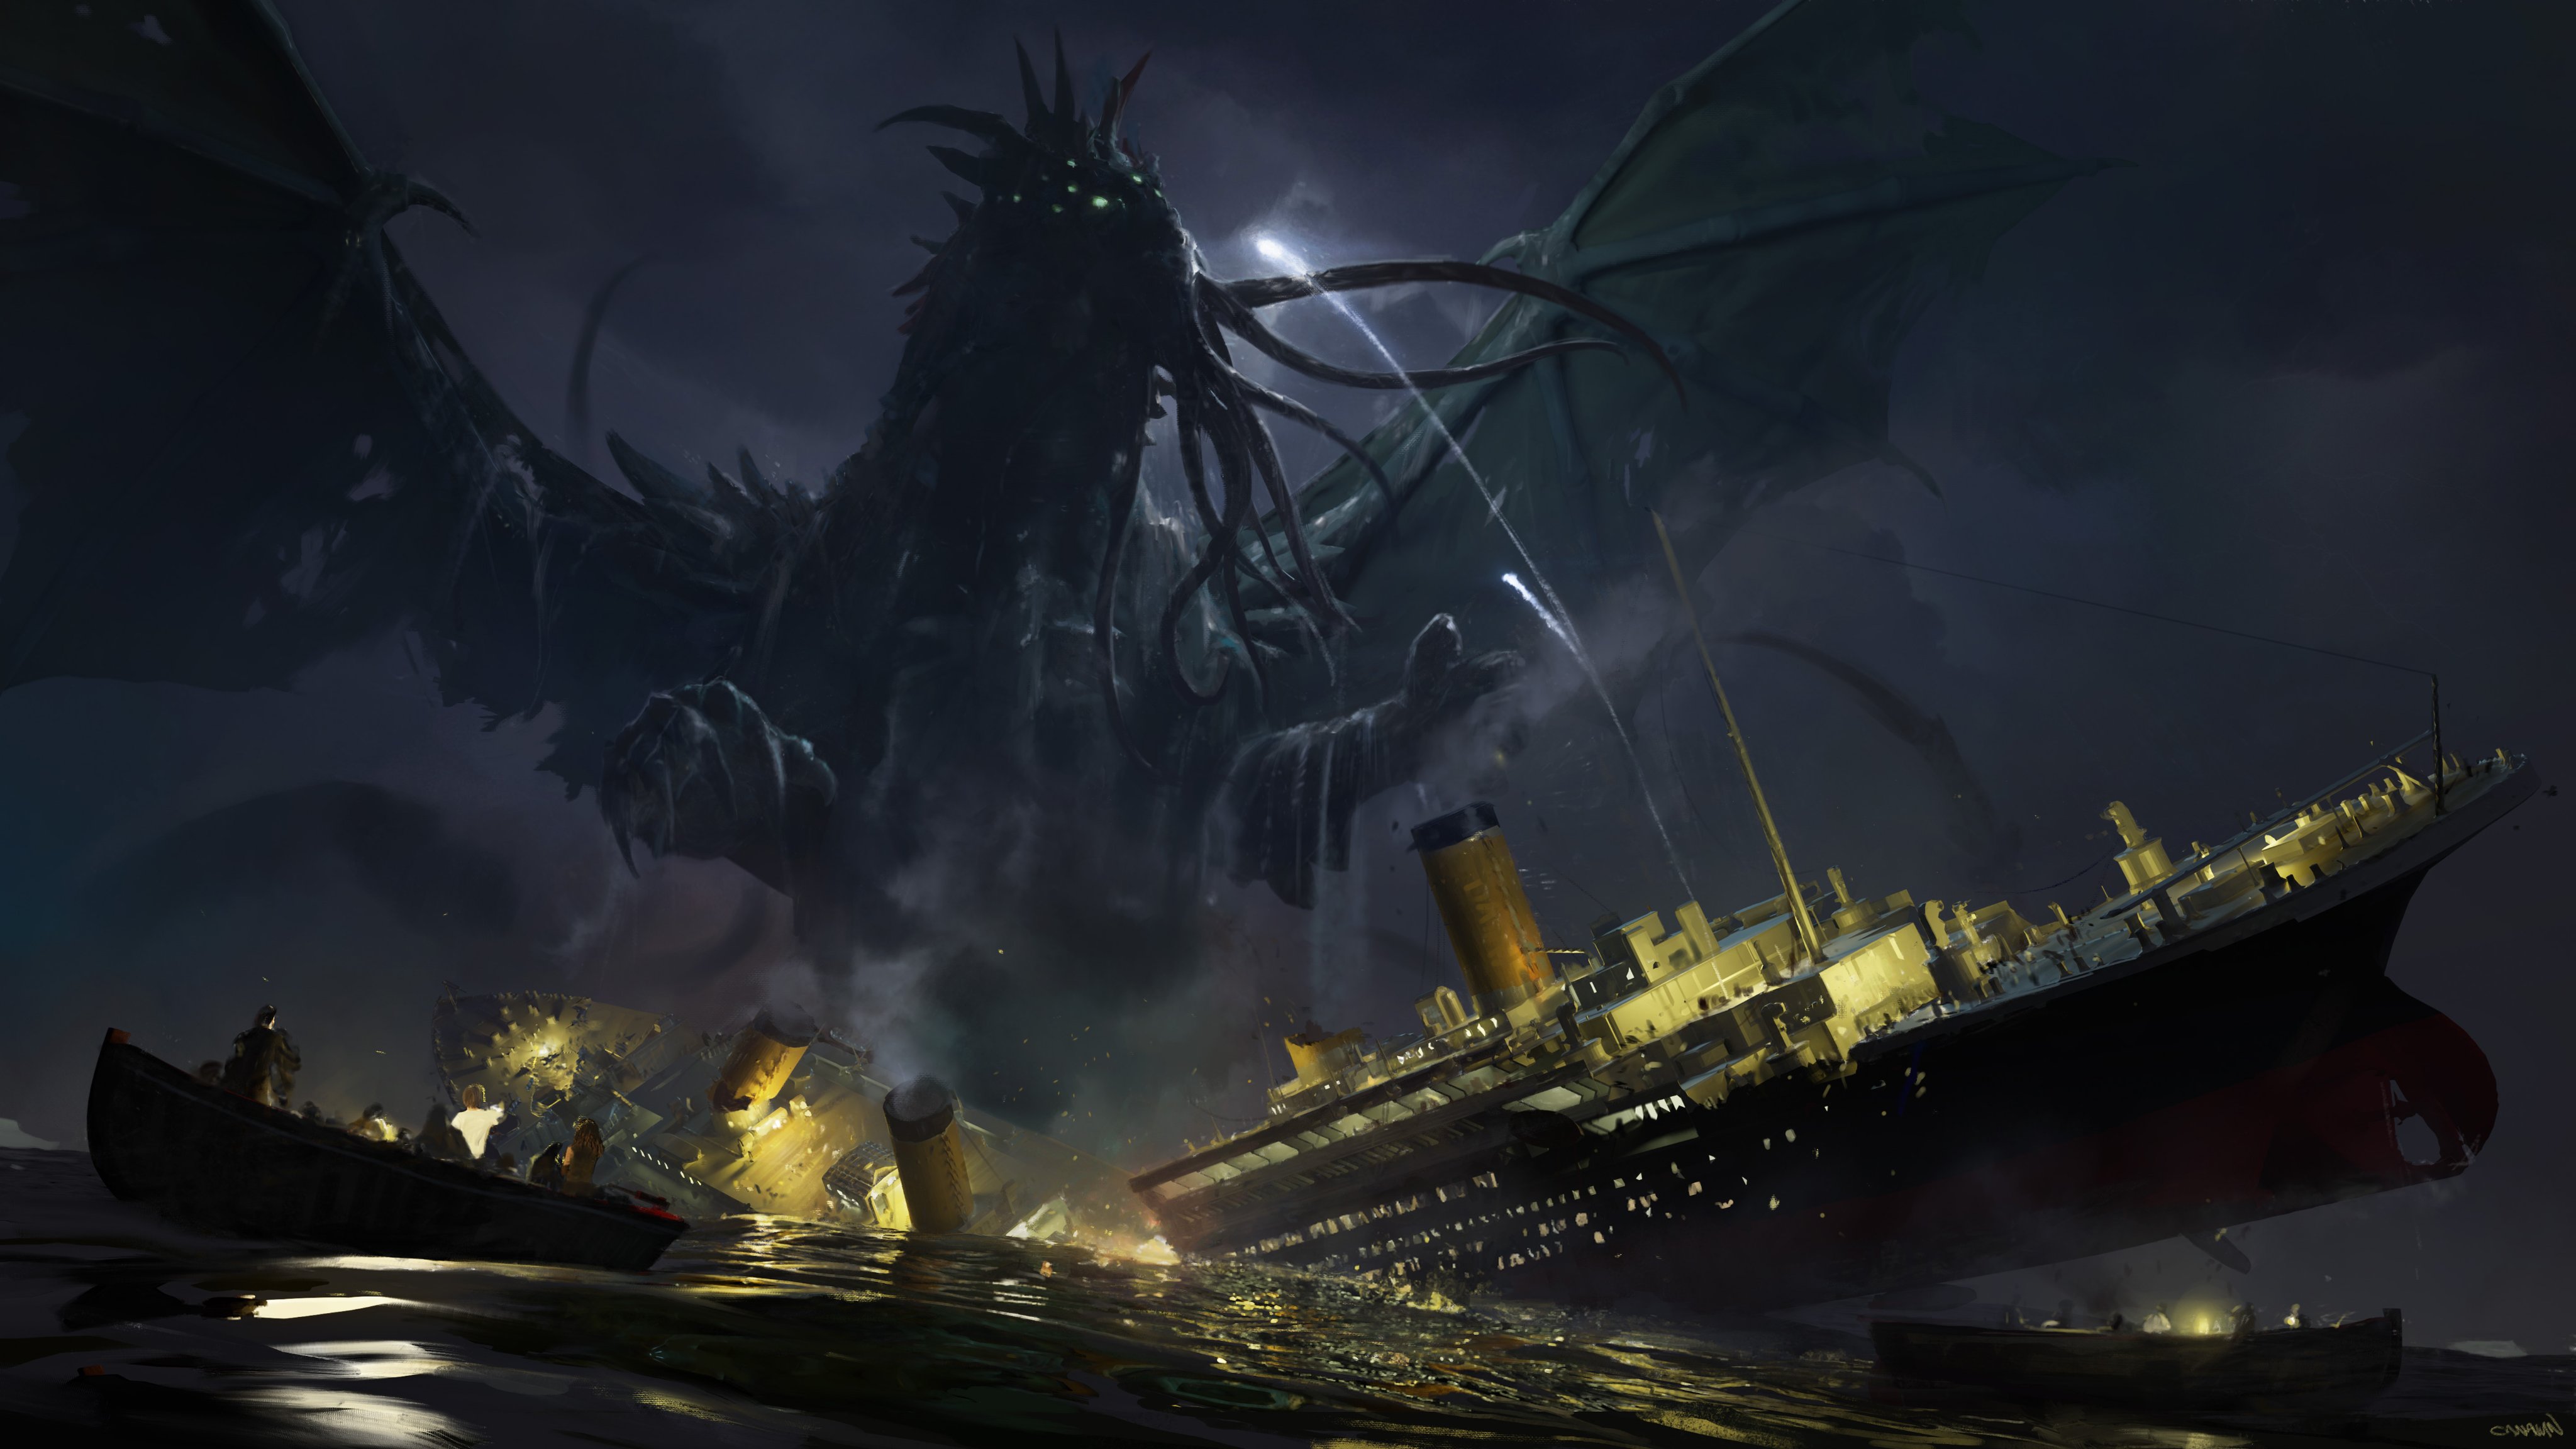 Artwork Fantasy Art Ship Sea Creature Cthulhu Titanic H P Lovecraft 4096x2304